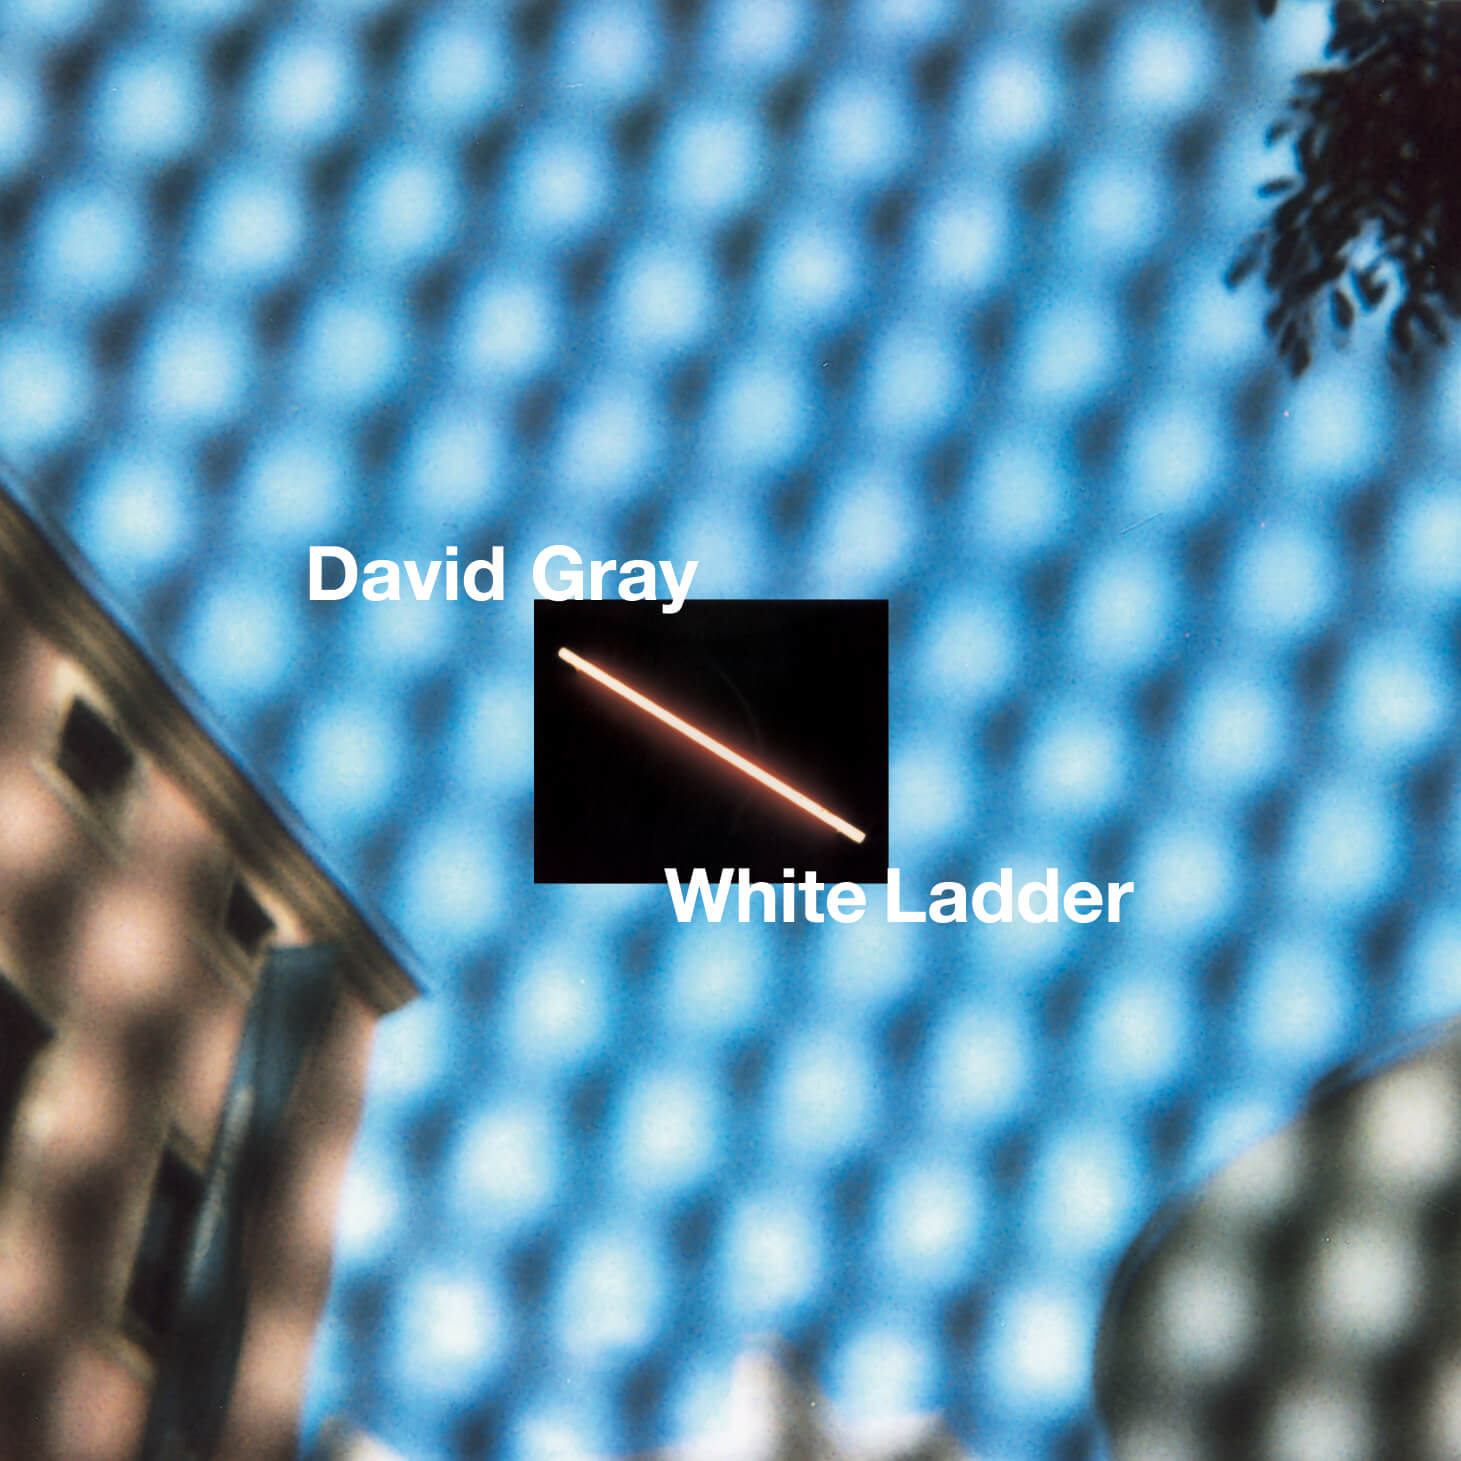 david gray white ladder tour review